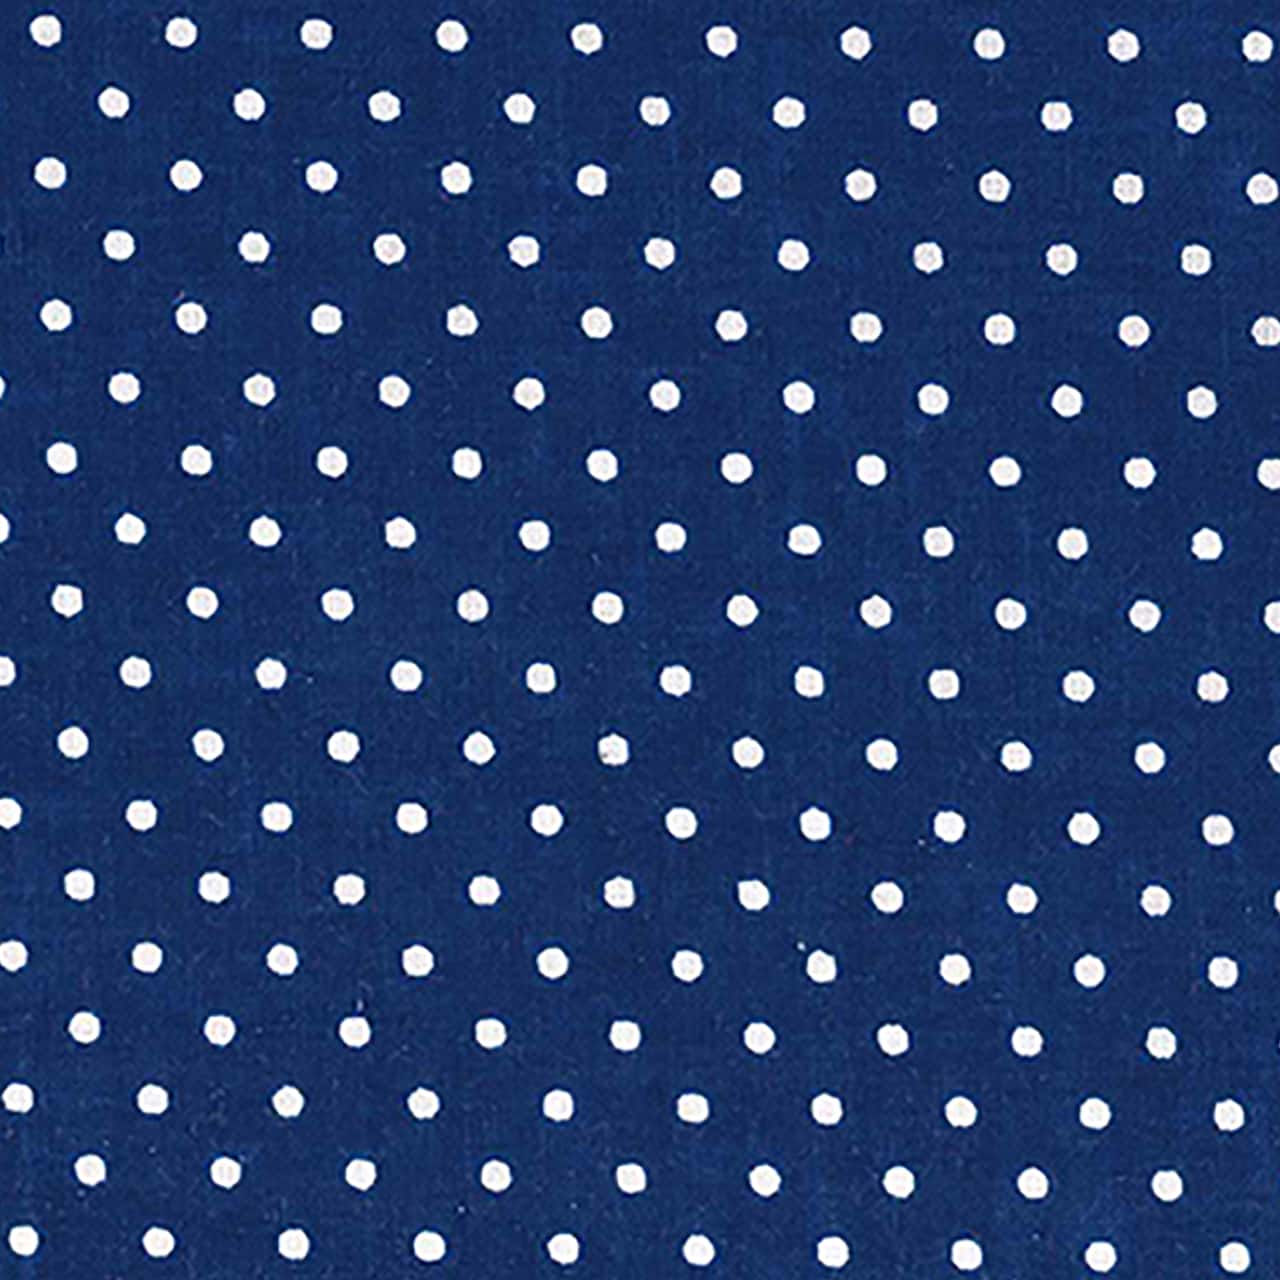 Fabric Traditions Navy Polka Dot Cotton Fabric